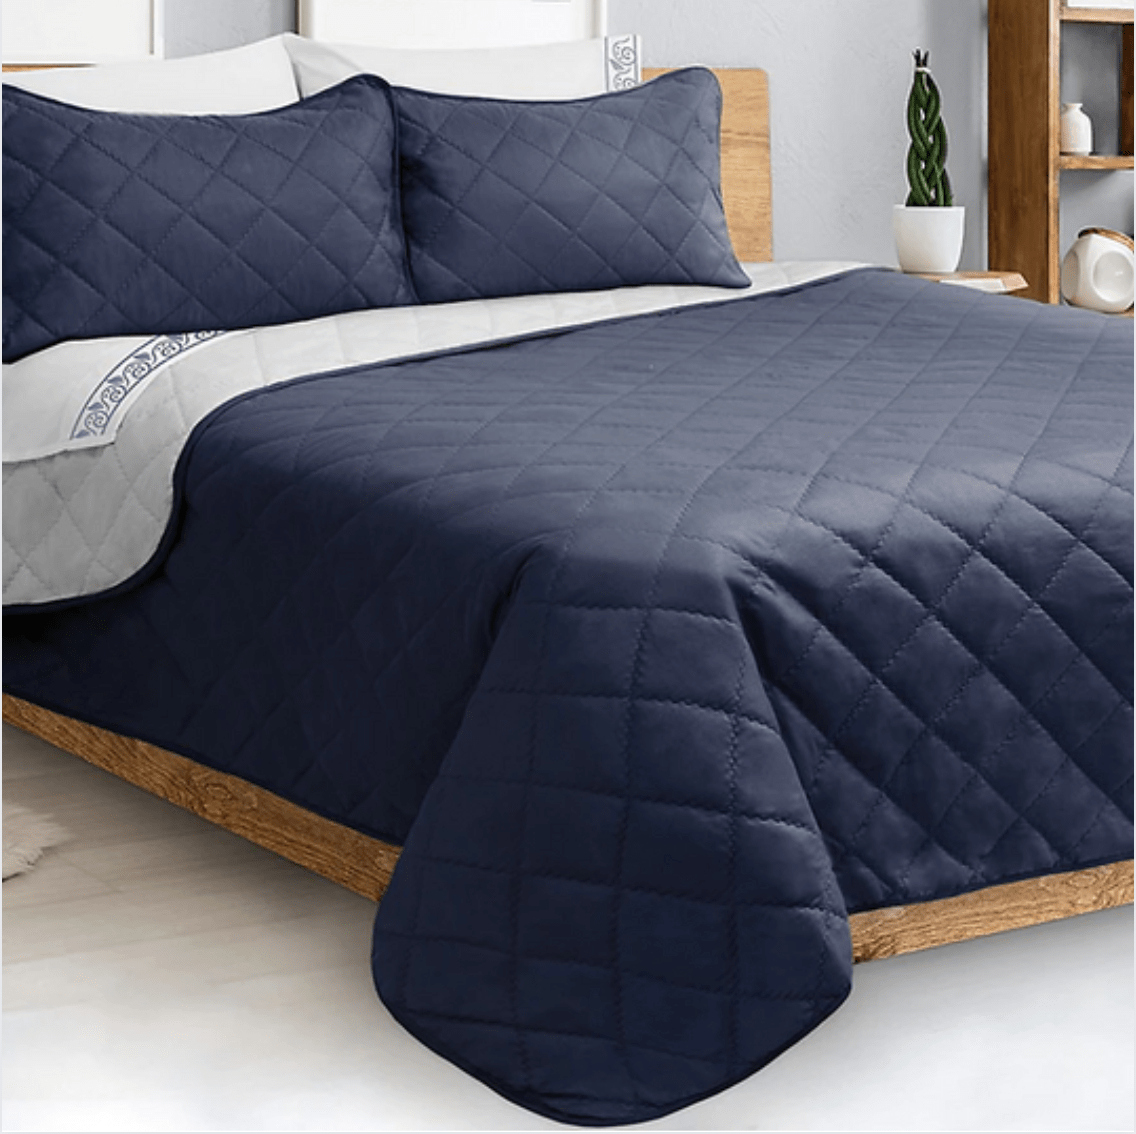 Solid Navy Blue 3 Piece Bedding Quilt Set